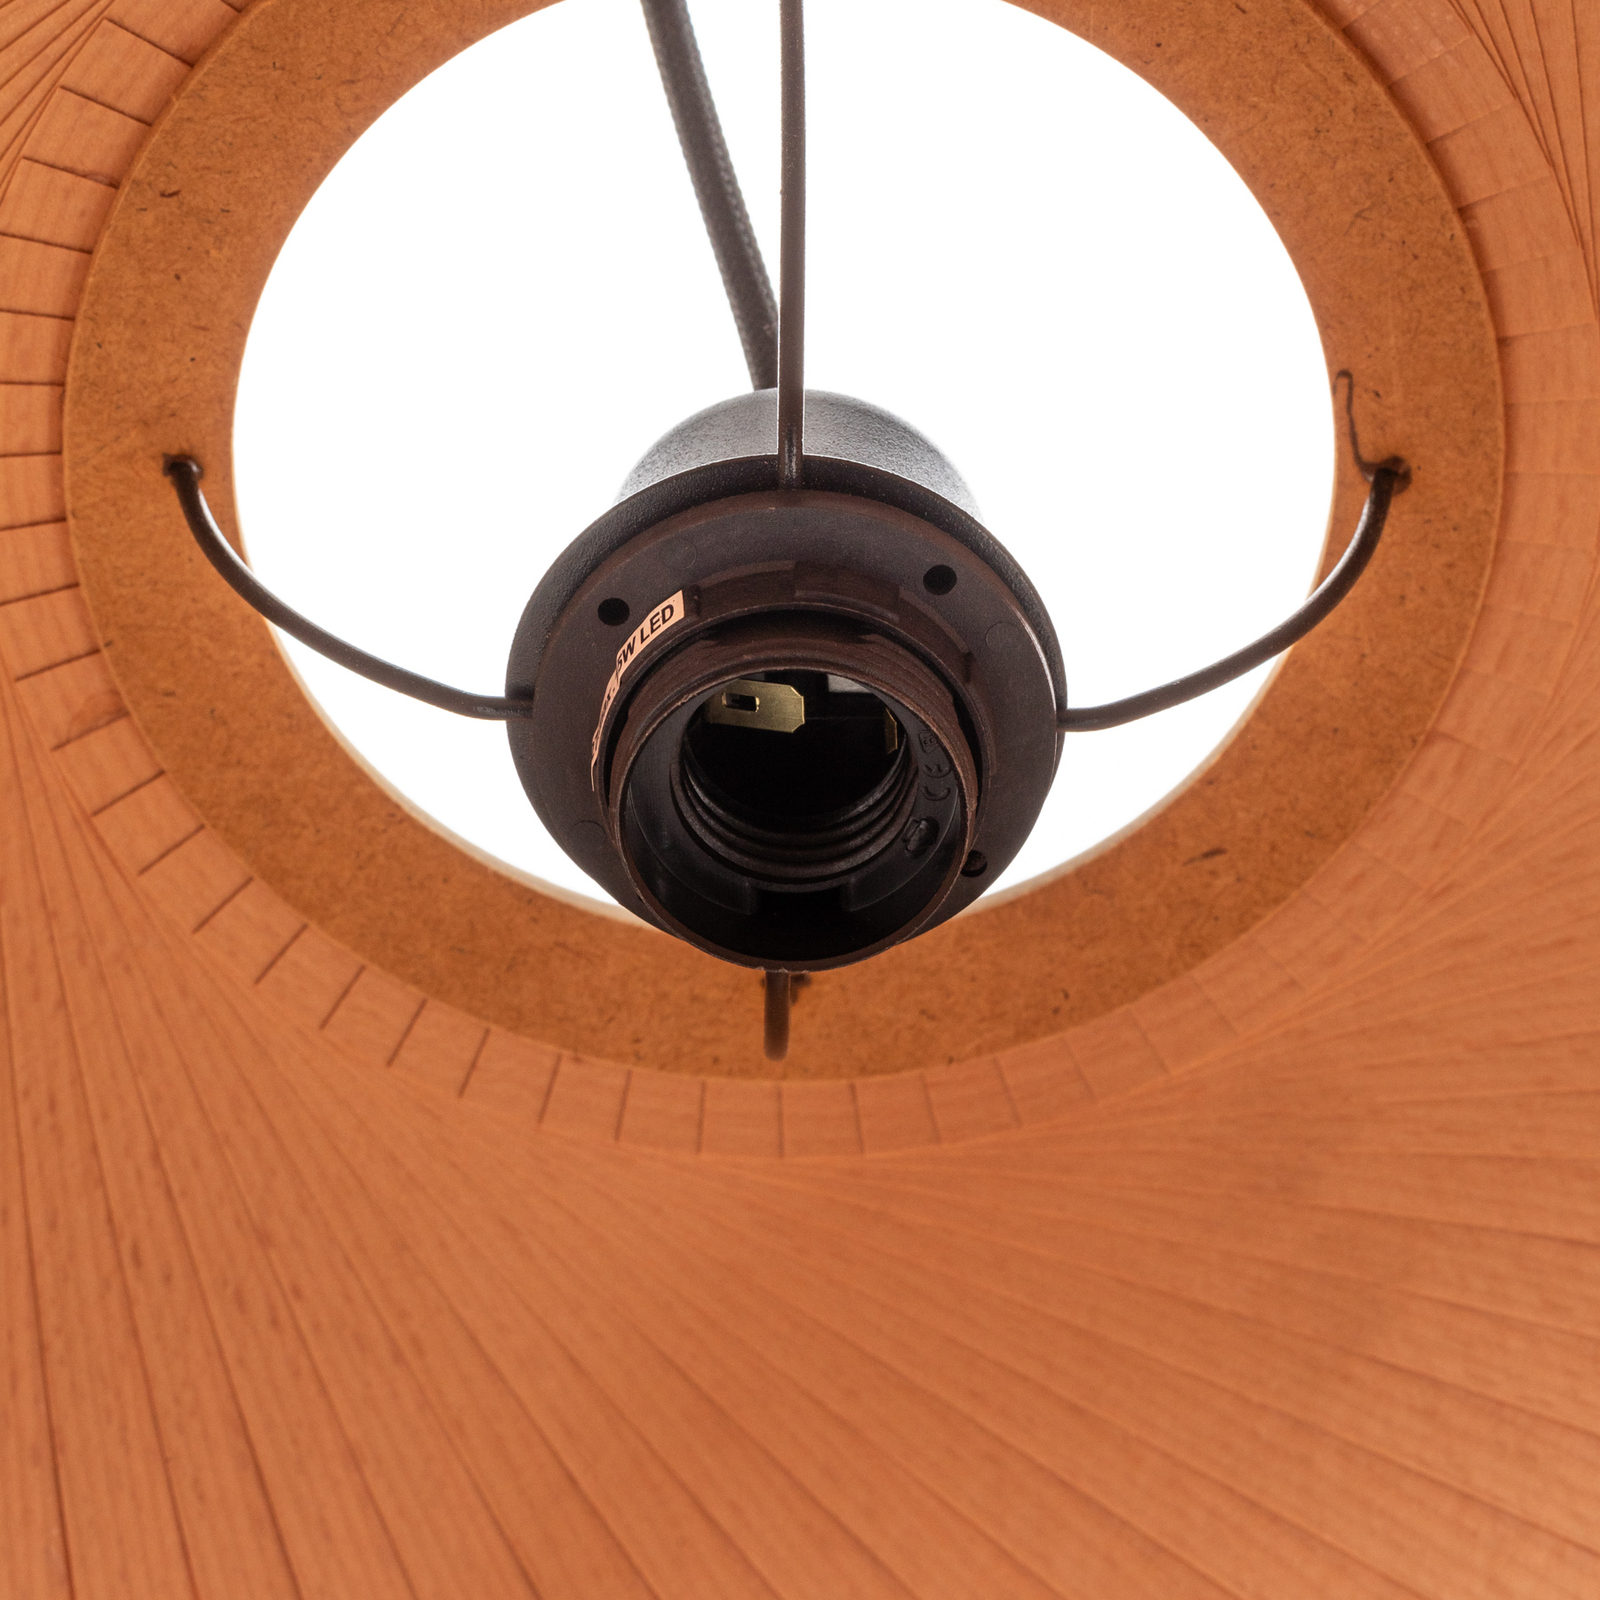 Envostar n.n pendant light made of wood, Ø 53 cm